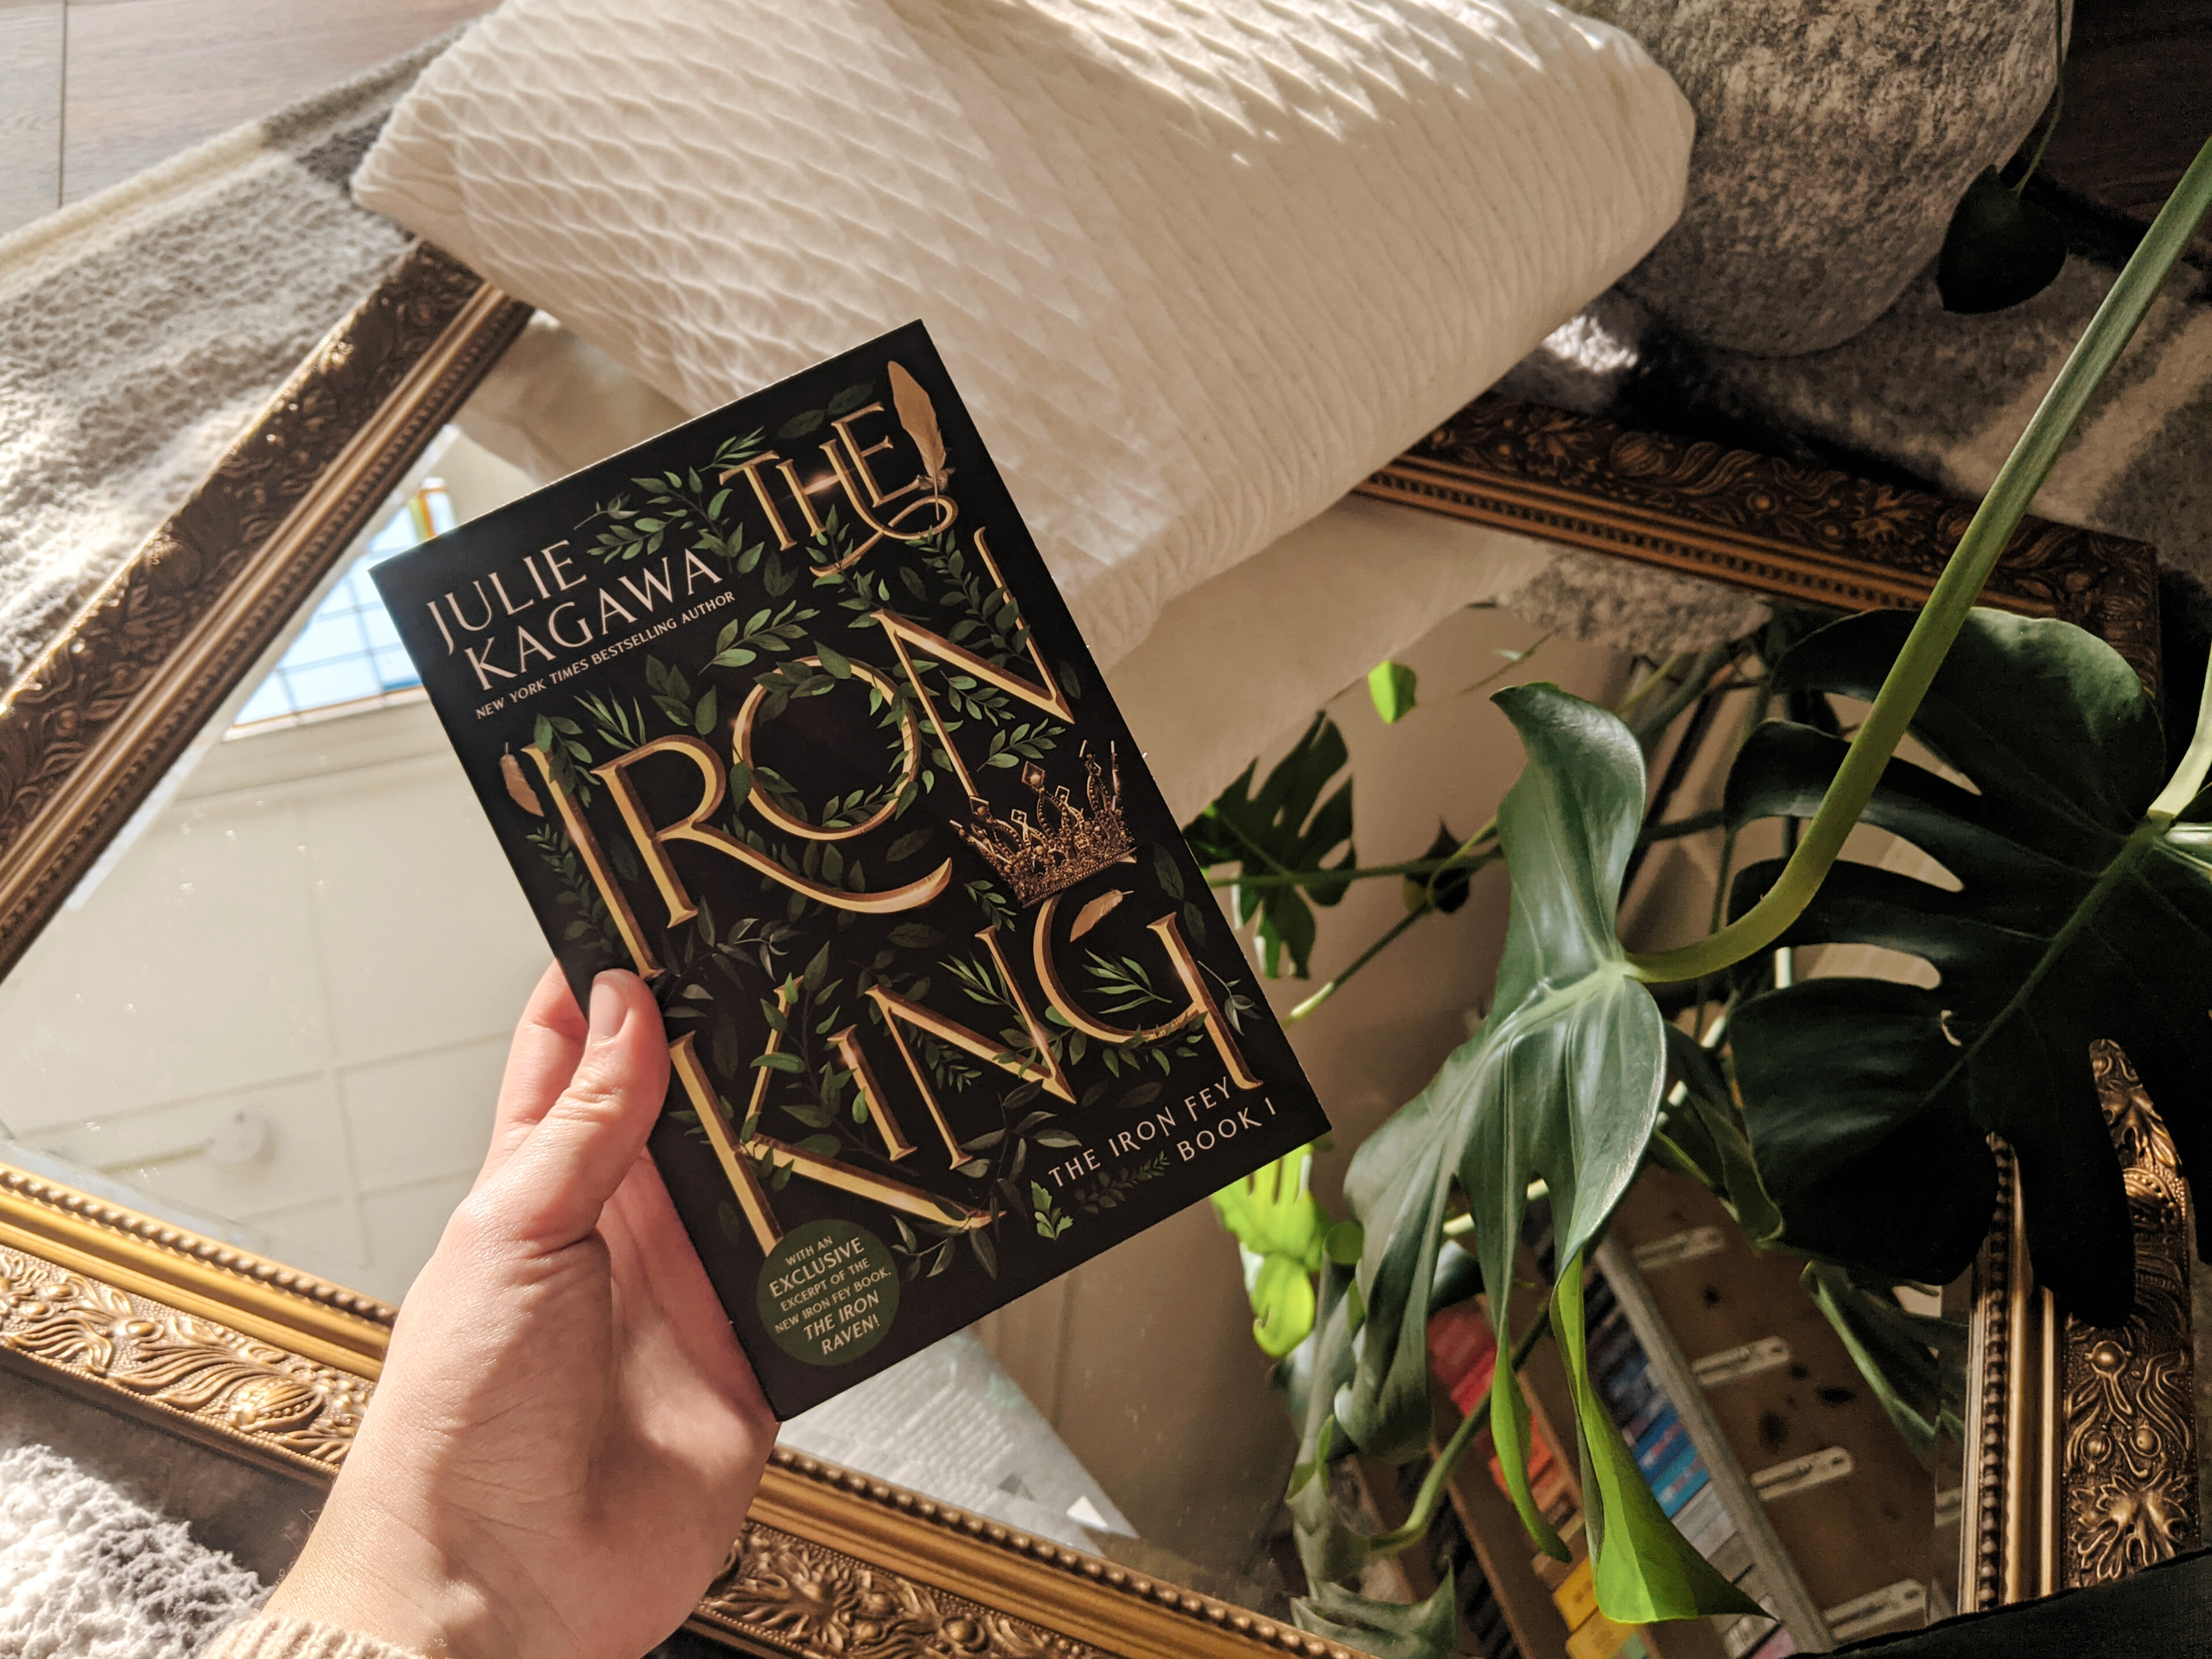 Julie Kagawa: The Iron King, English